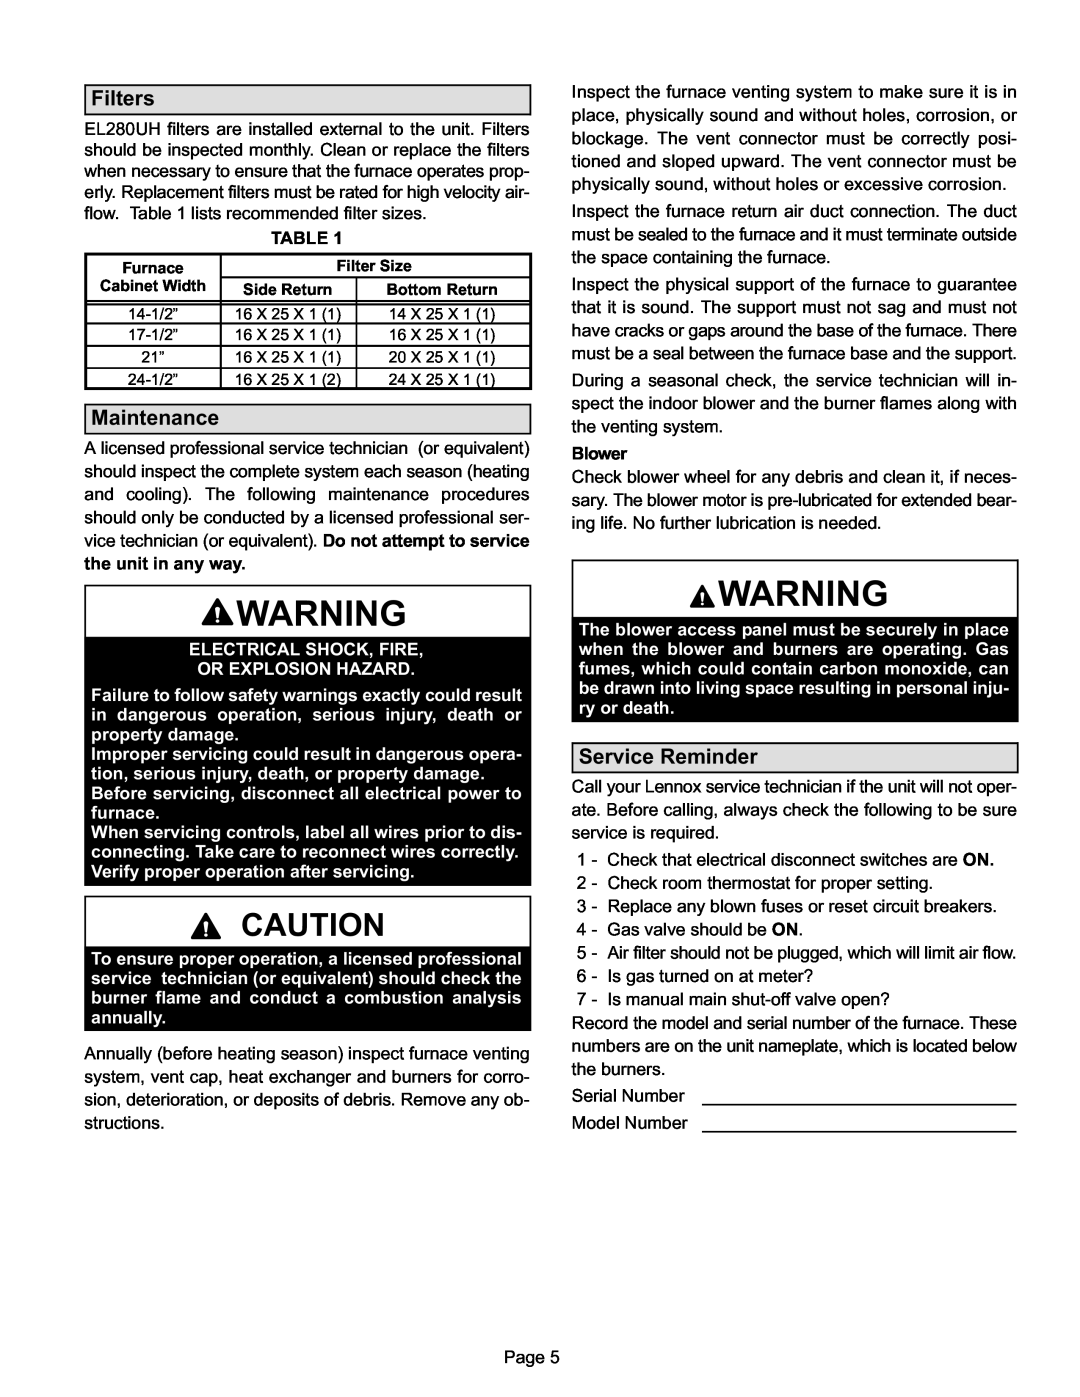 Lennox International Inc EL280UH manual Filters, Maintenance, Service Reminder 